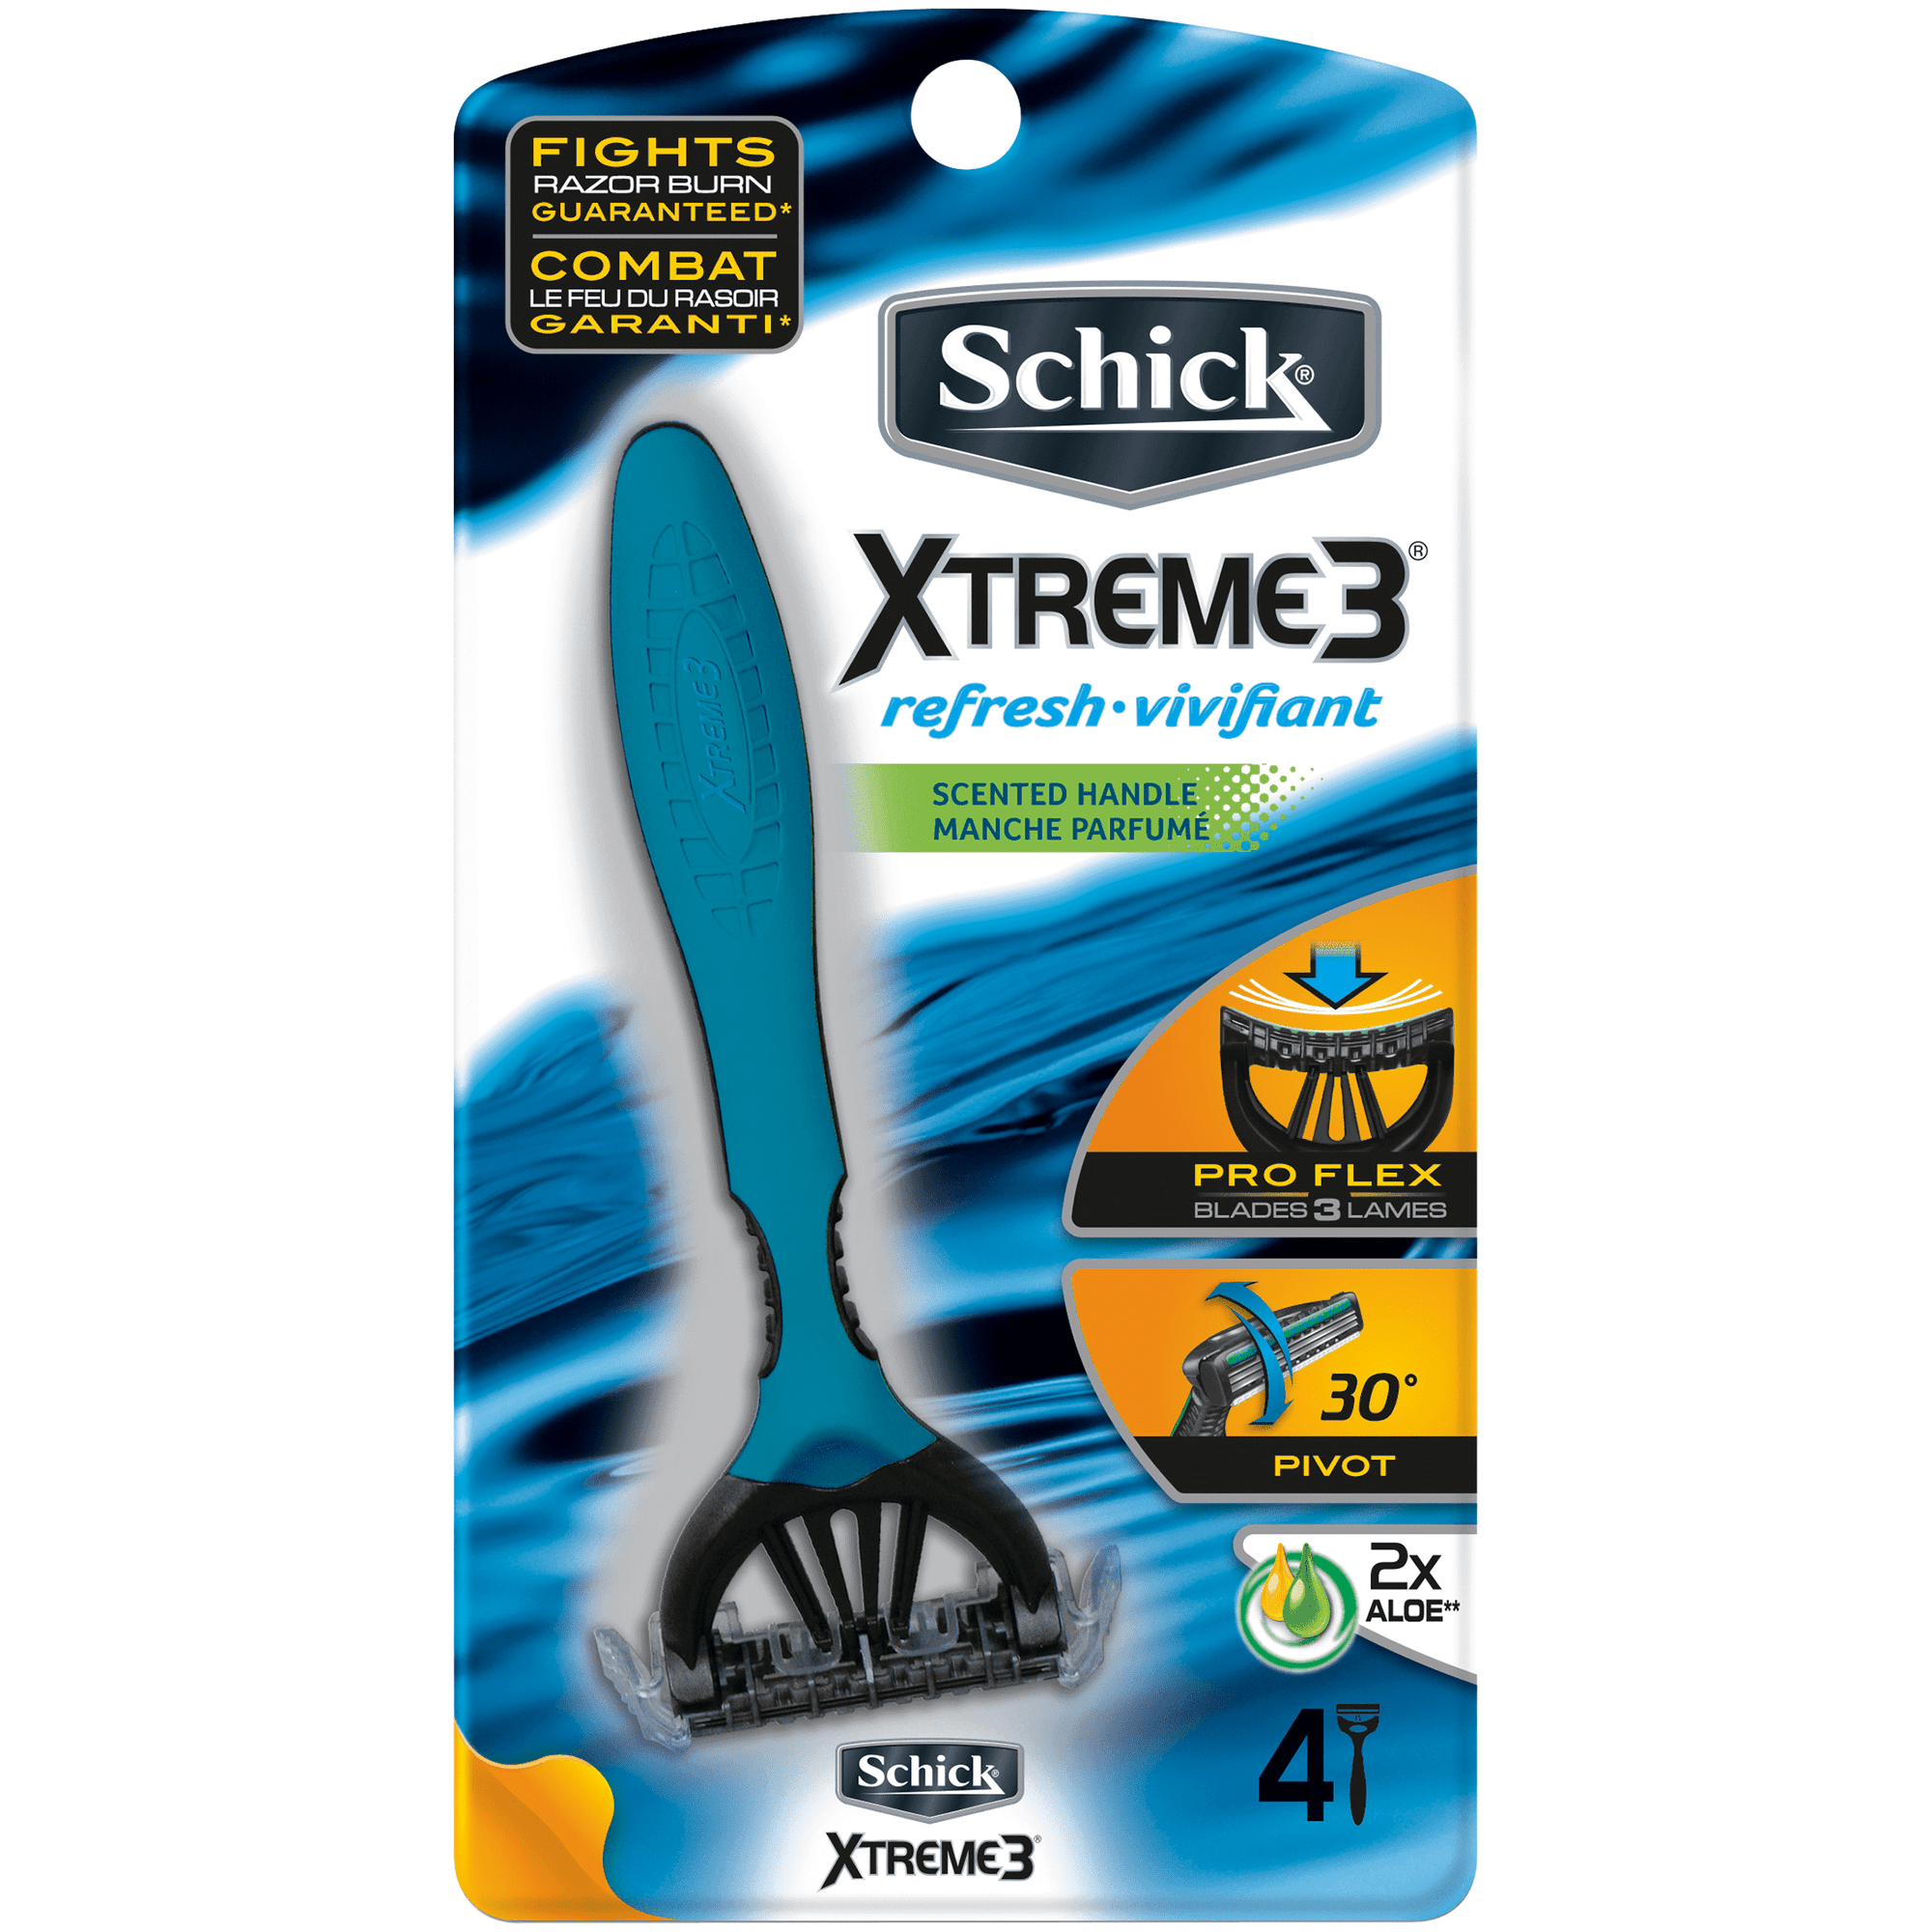 Schick Xtreme 4 Outlast Razor, 4 Ct